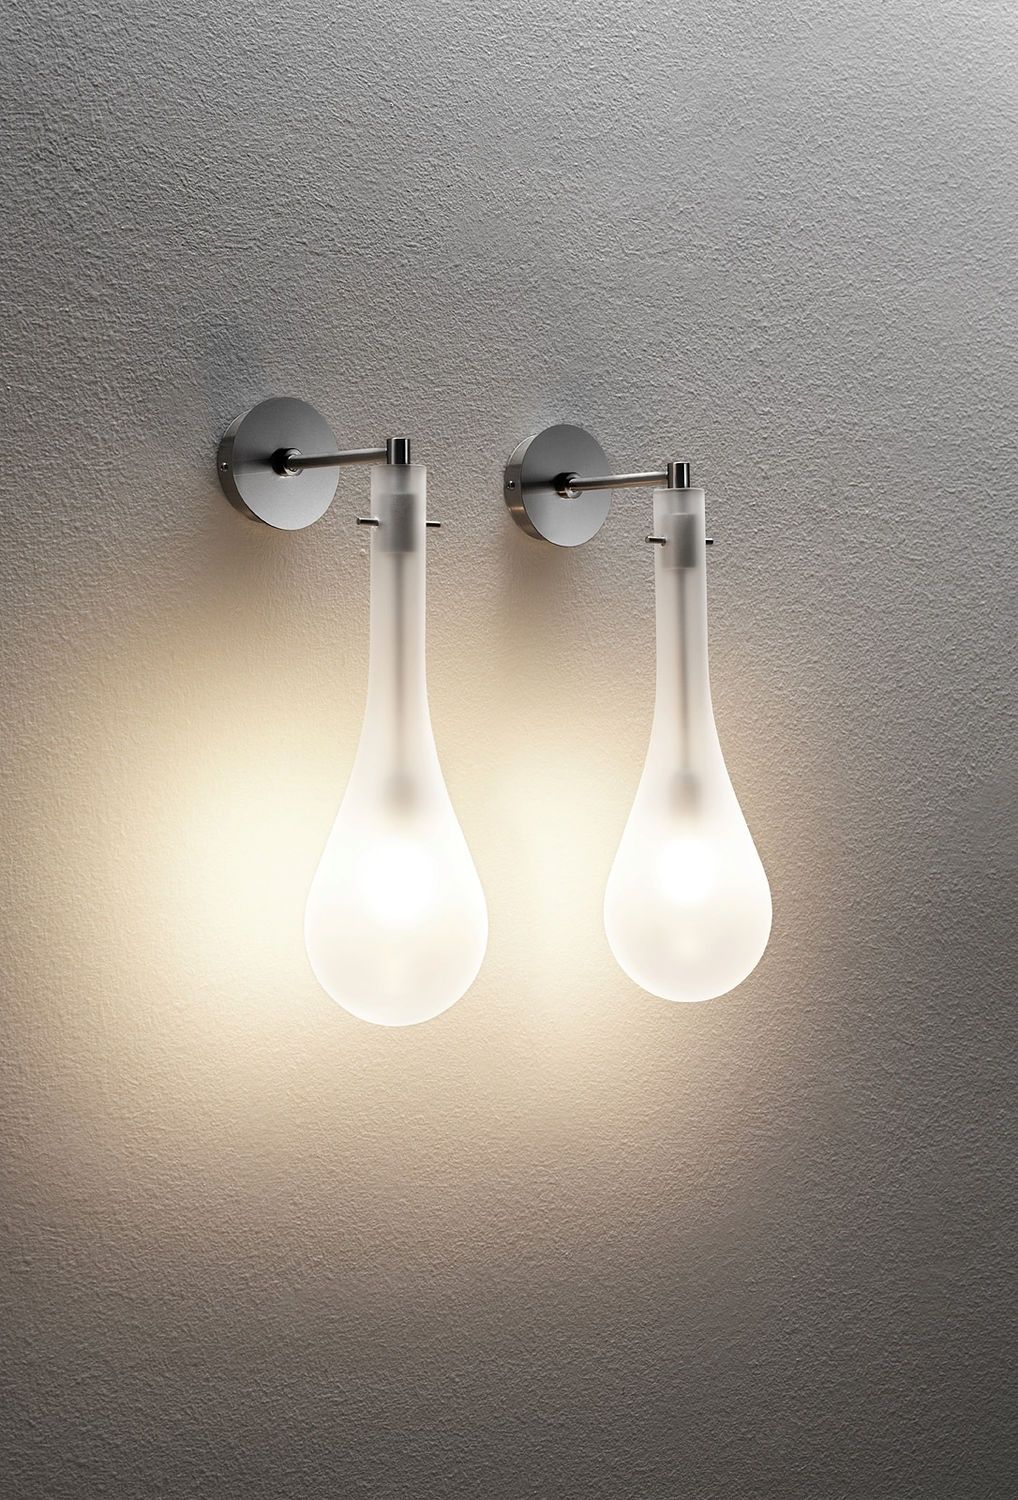 Designer Bathroom Wall Lights Home Design Ideas With Regard To Bathroom Chandelier Wall Lights (Photo 10 of 25)